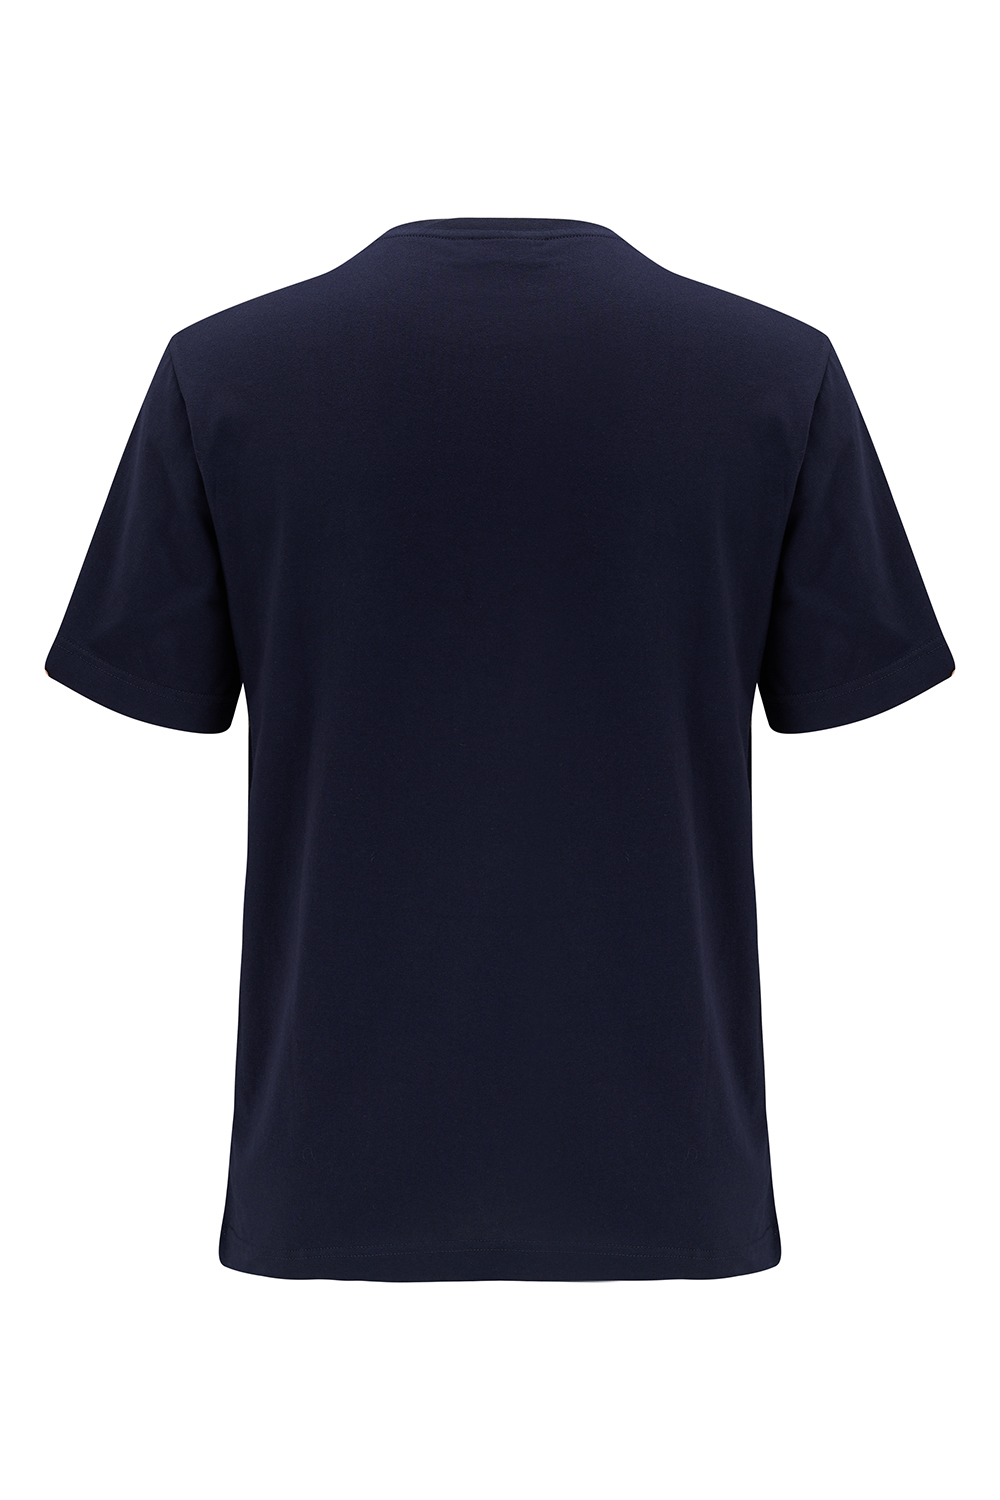 Missoni Men's Short-Sleeve Print T-shirt Navy - New S23 Collection ...